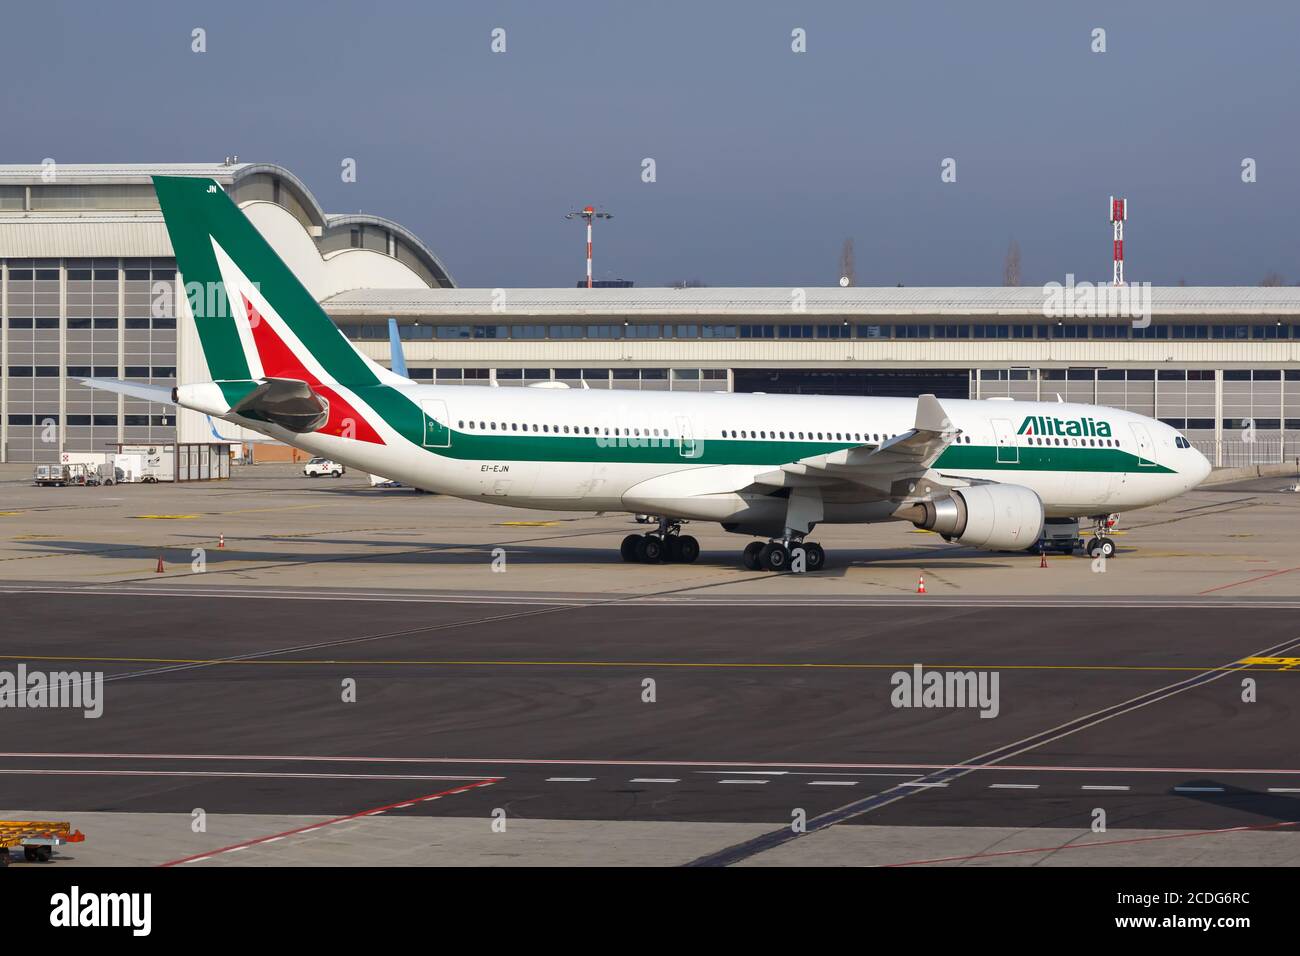 Mailand, Italien - 16. Februar 2018: Alitalia Airbus A330-200 am Flughafen Mailand Malpensa (MXP) in Italien. Airbus ist eine europäische Flugzeugmanufaktur Stockfoto